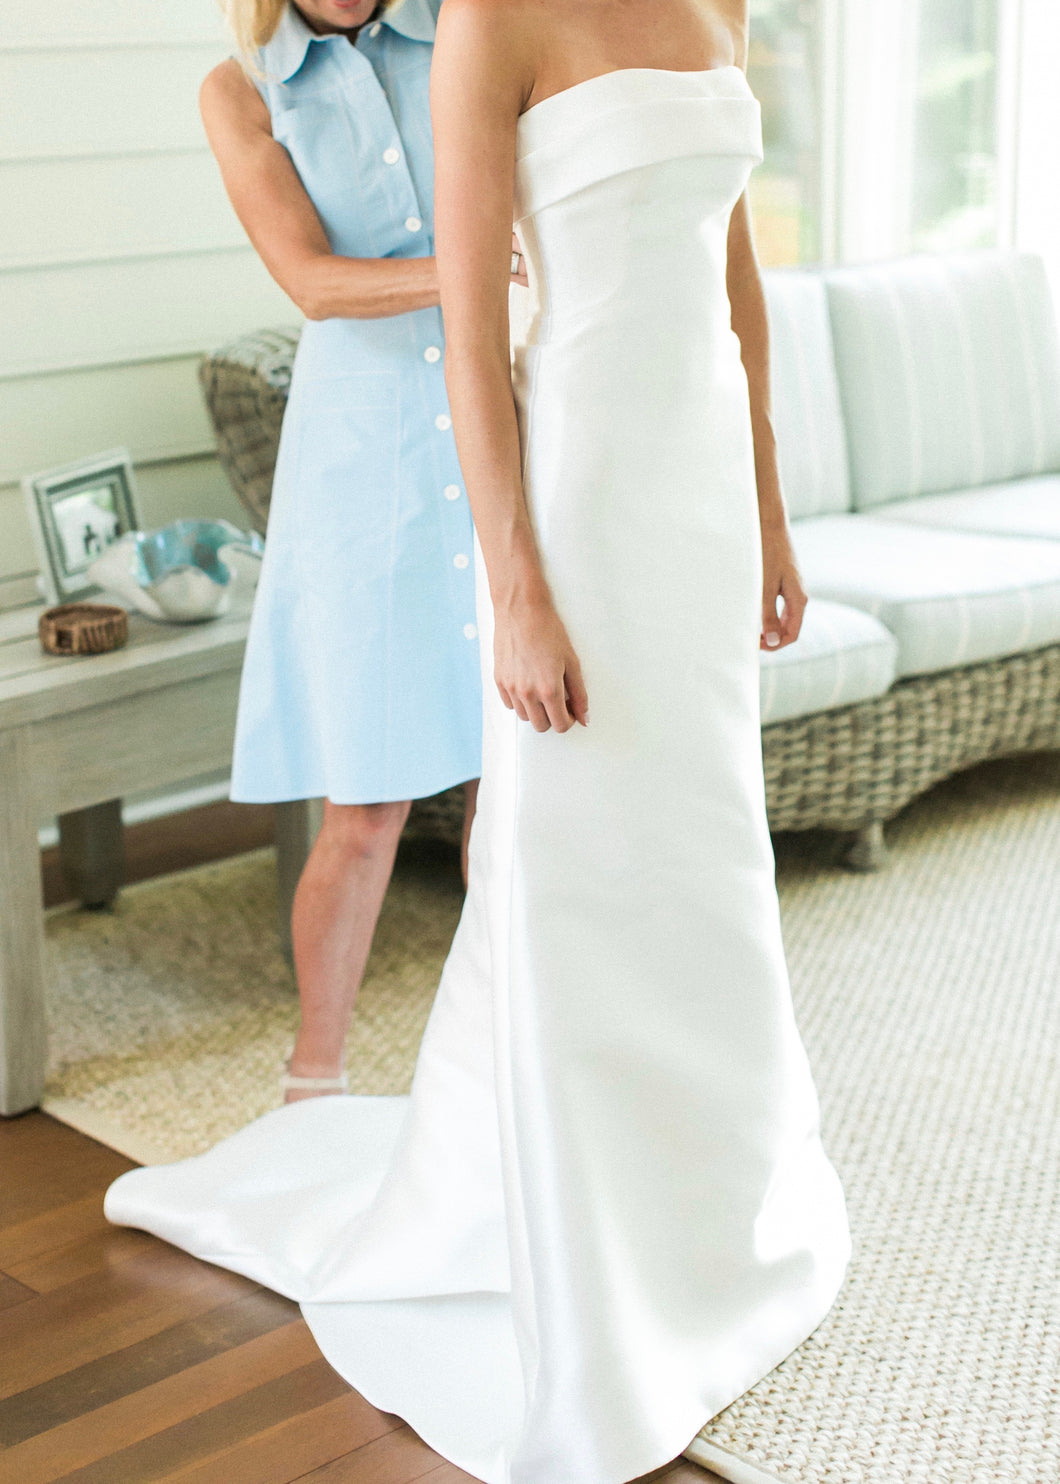 Pronovias 'Tasiala' size 2 used wedding dress front view on bride